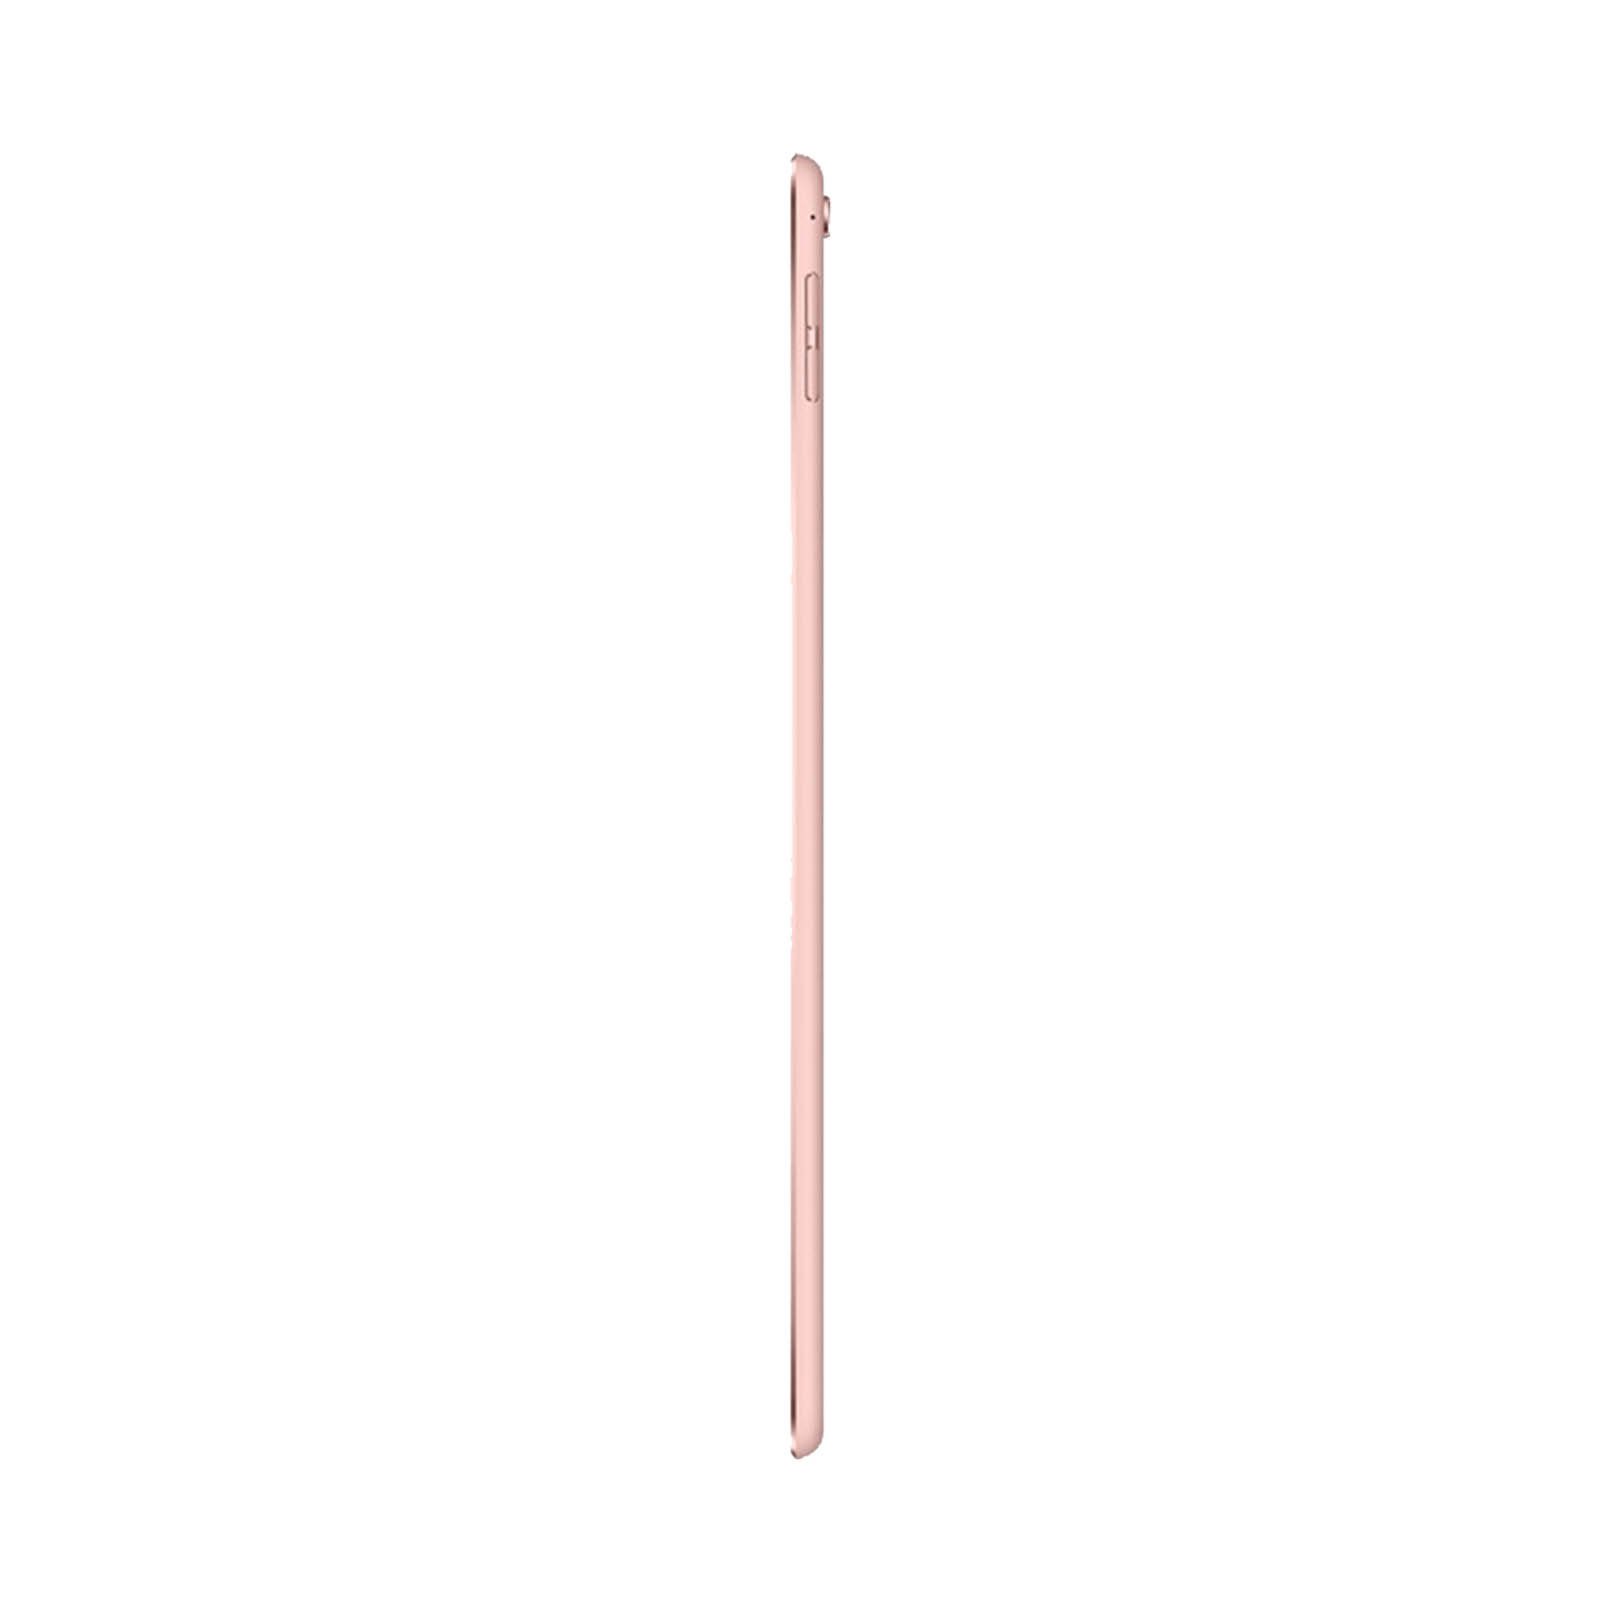 iPad Pro 9.7 Inch 32GB Rose Gold Good - Unlocked